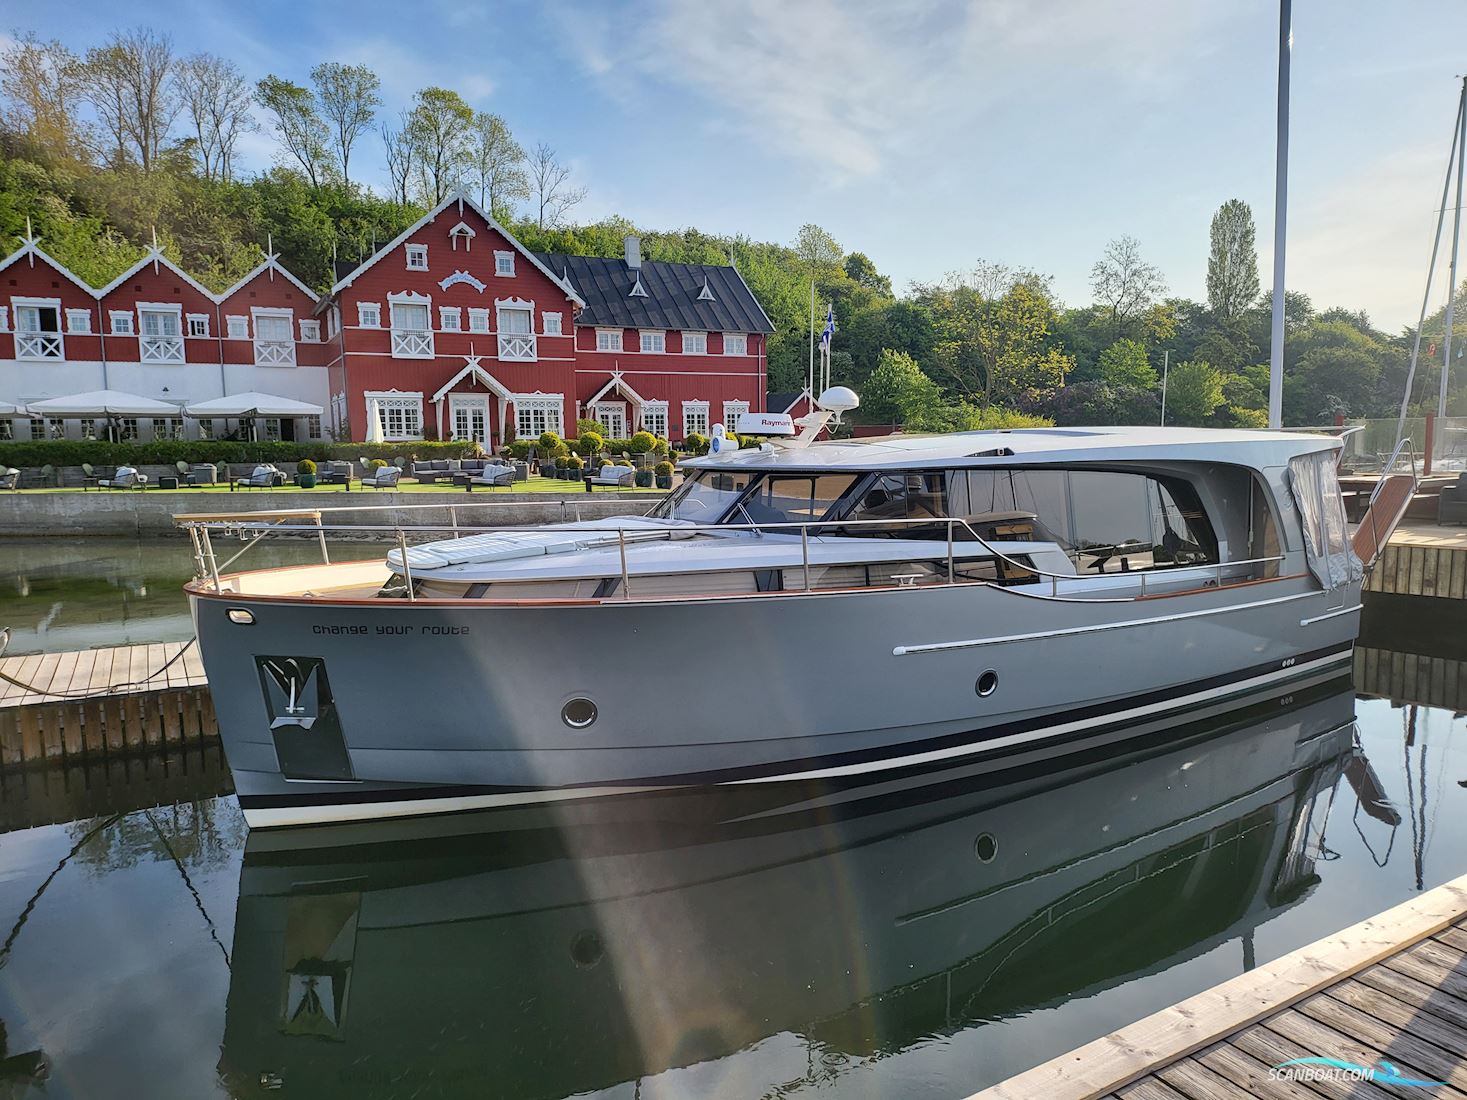 Greenline 40 Motor boat 2013, with Wolksvagen Tdi 150 engine, Denmark